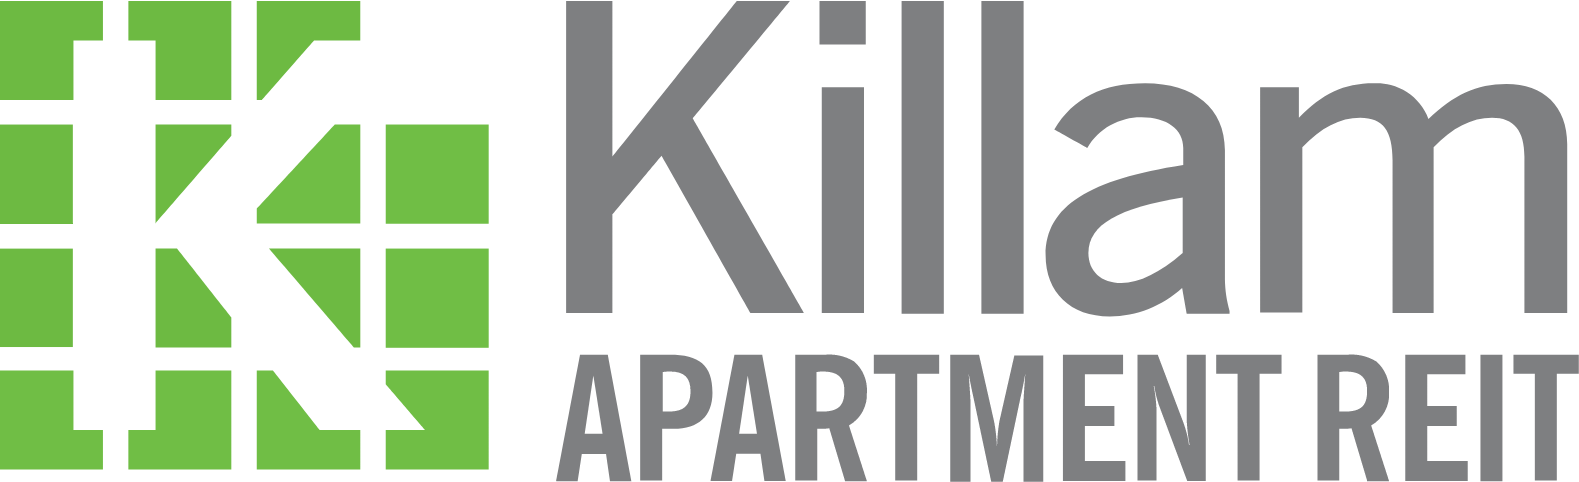 Killam Apartment REIT logo large (transparent PNG)